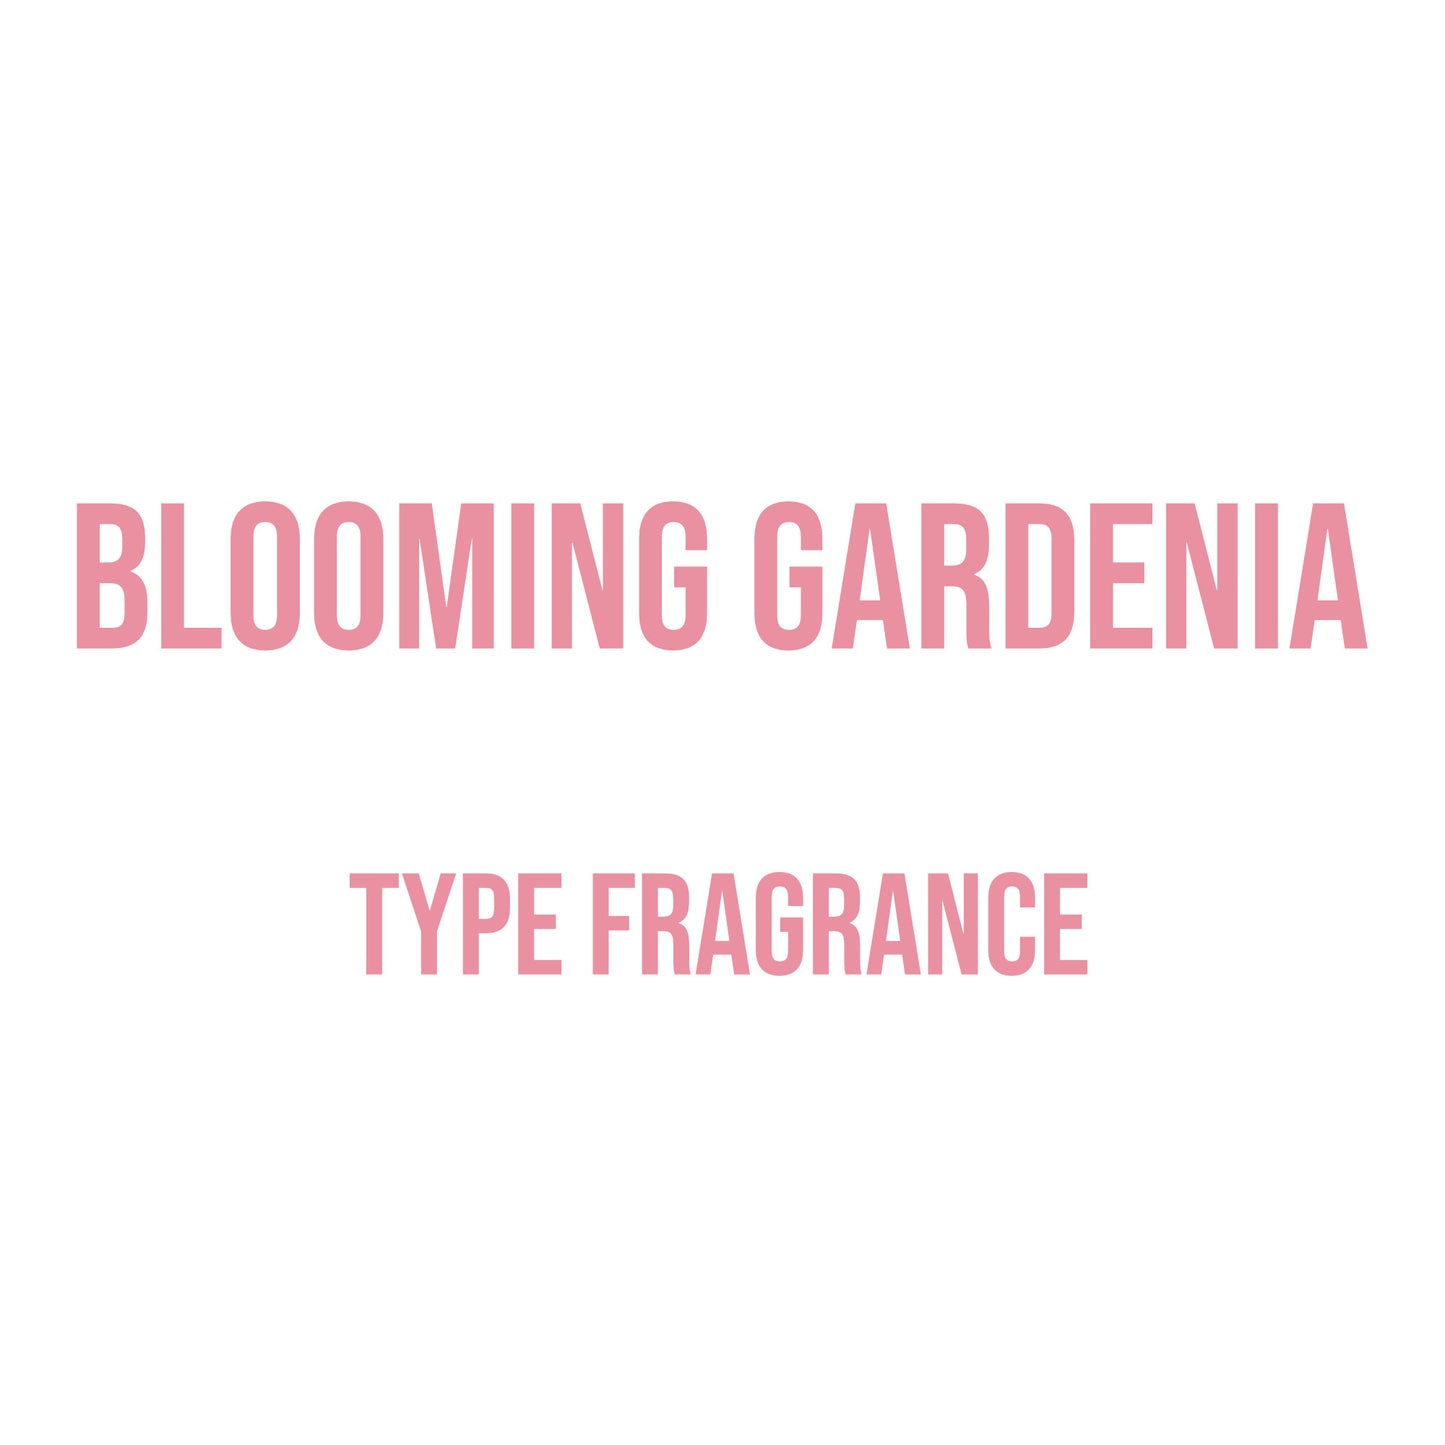 Blooming Gardenia Type Fragrance